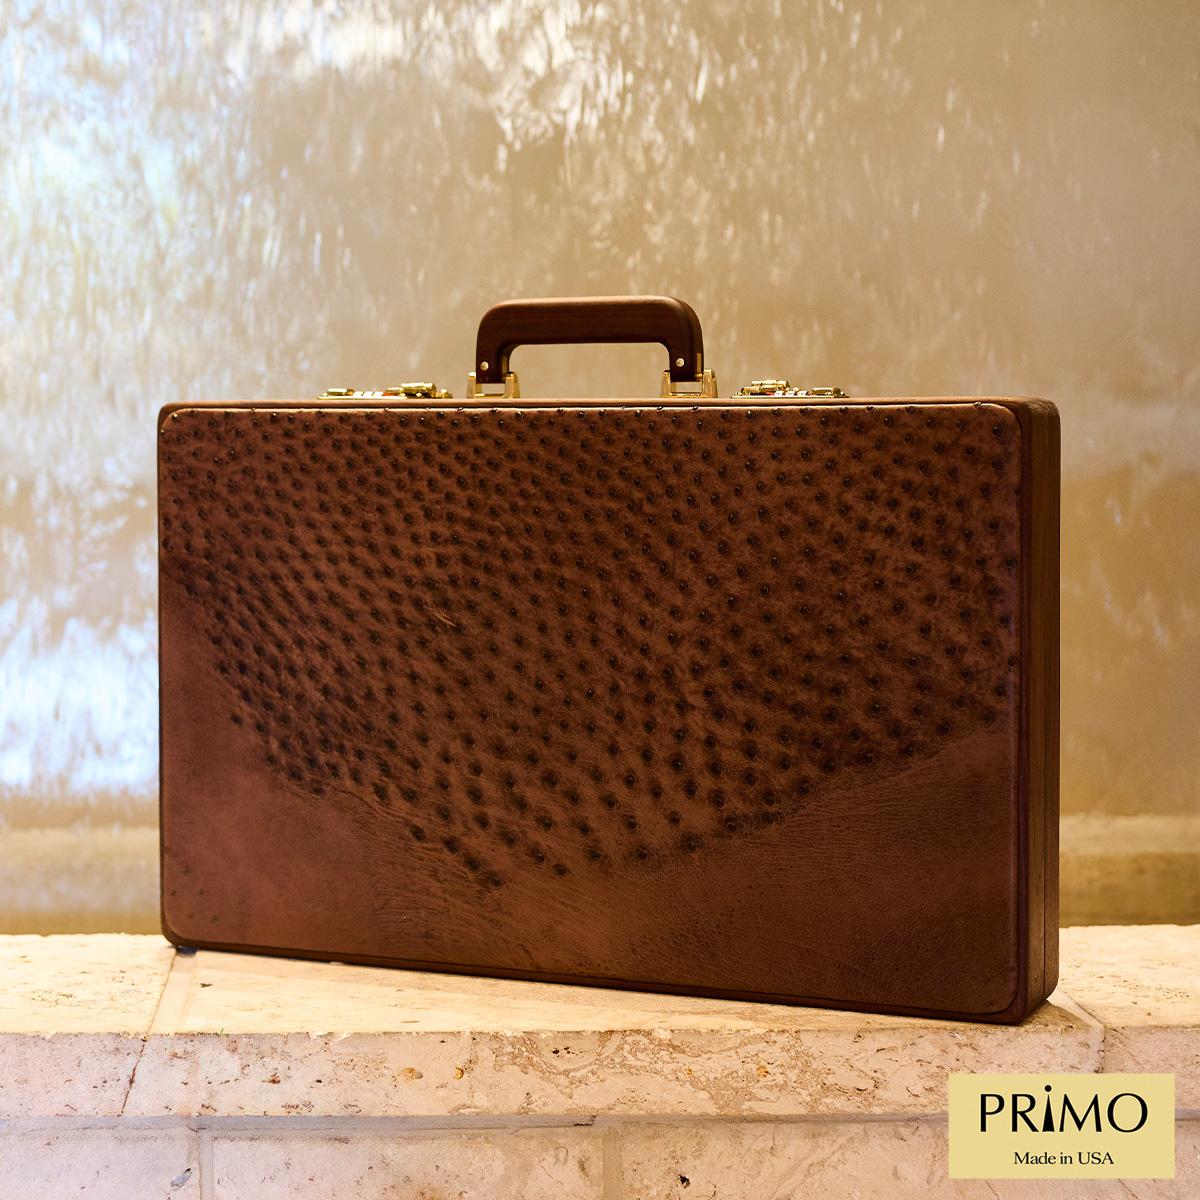 PRIMO "Walnut & Ostrich" Luxury Backgammon Board Set "Master" Mod. - (22 1/4", Walnut Wood, Genuine Ostrich Leather)